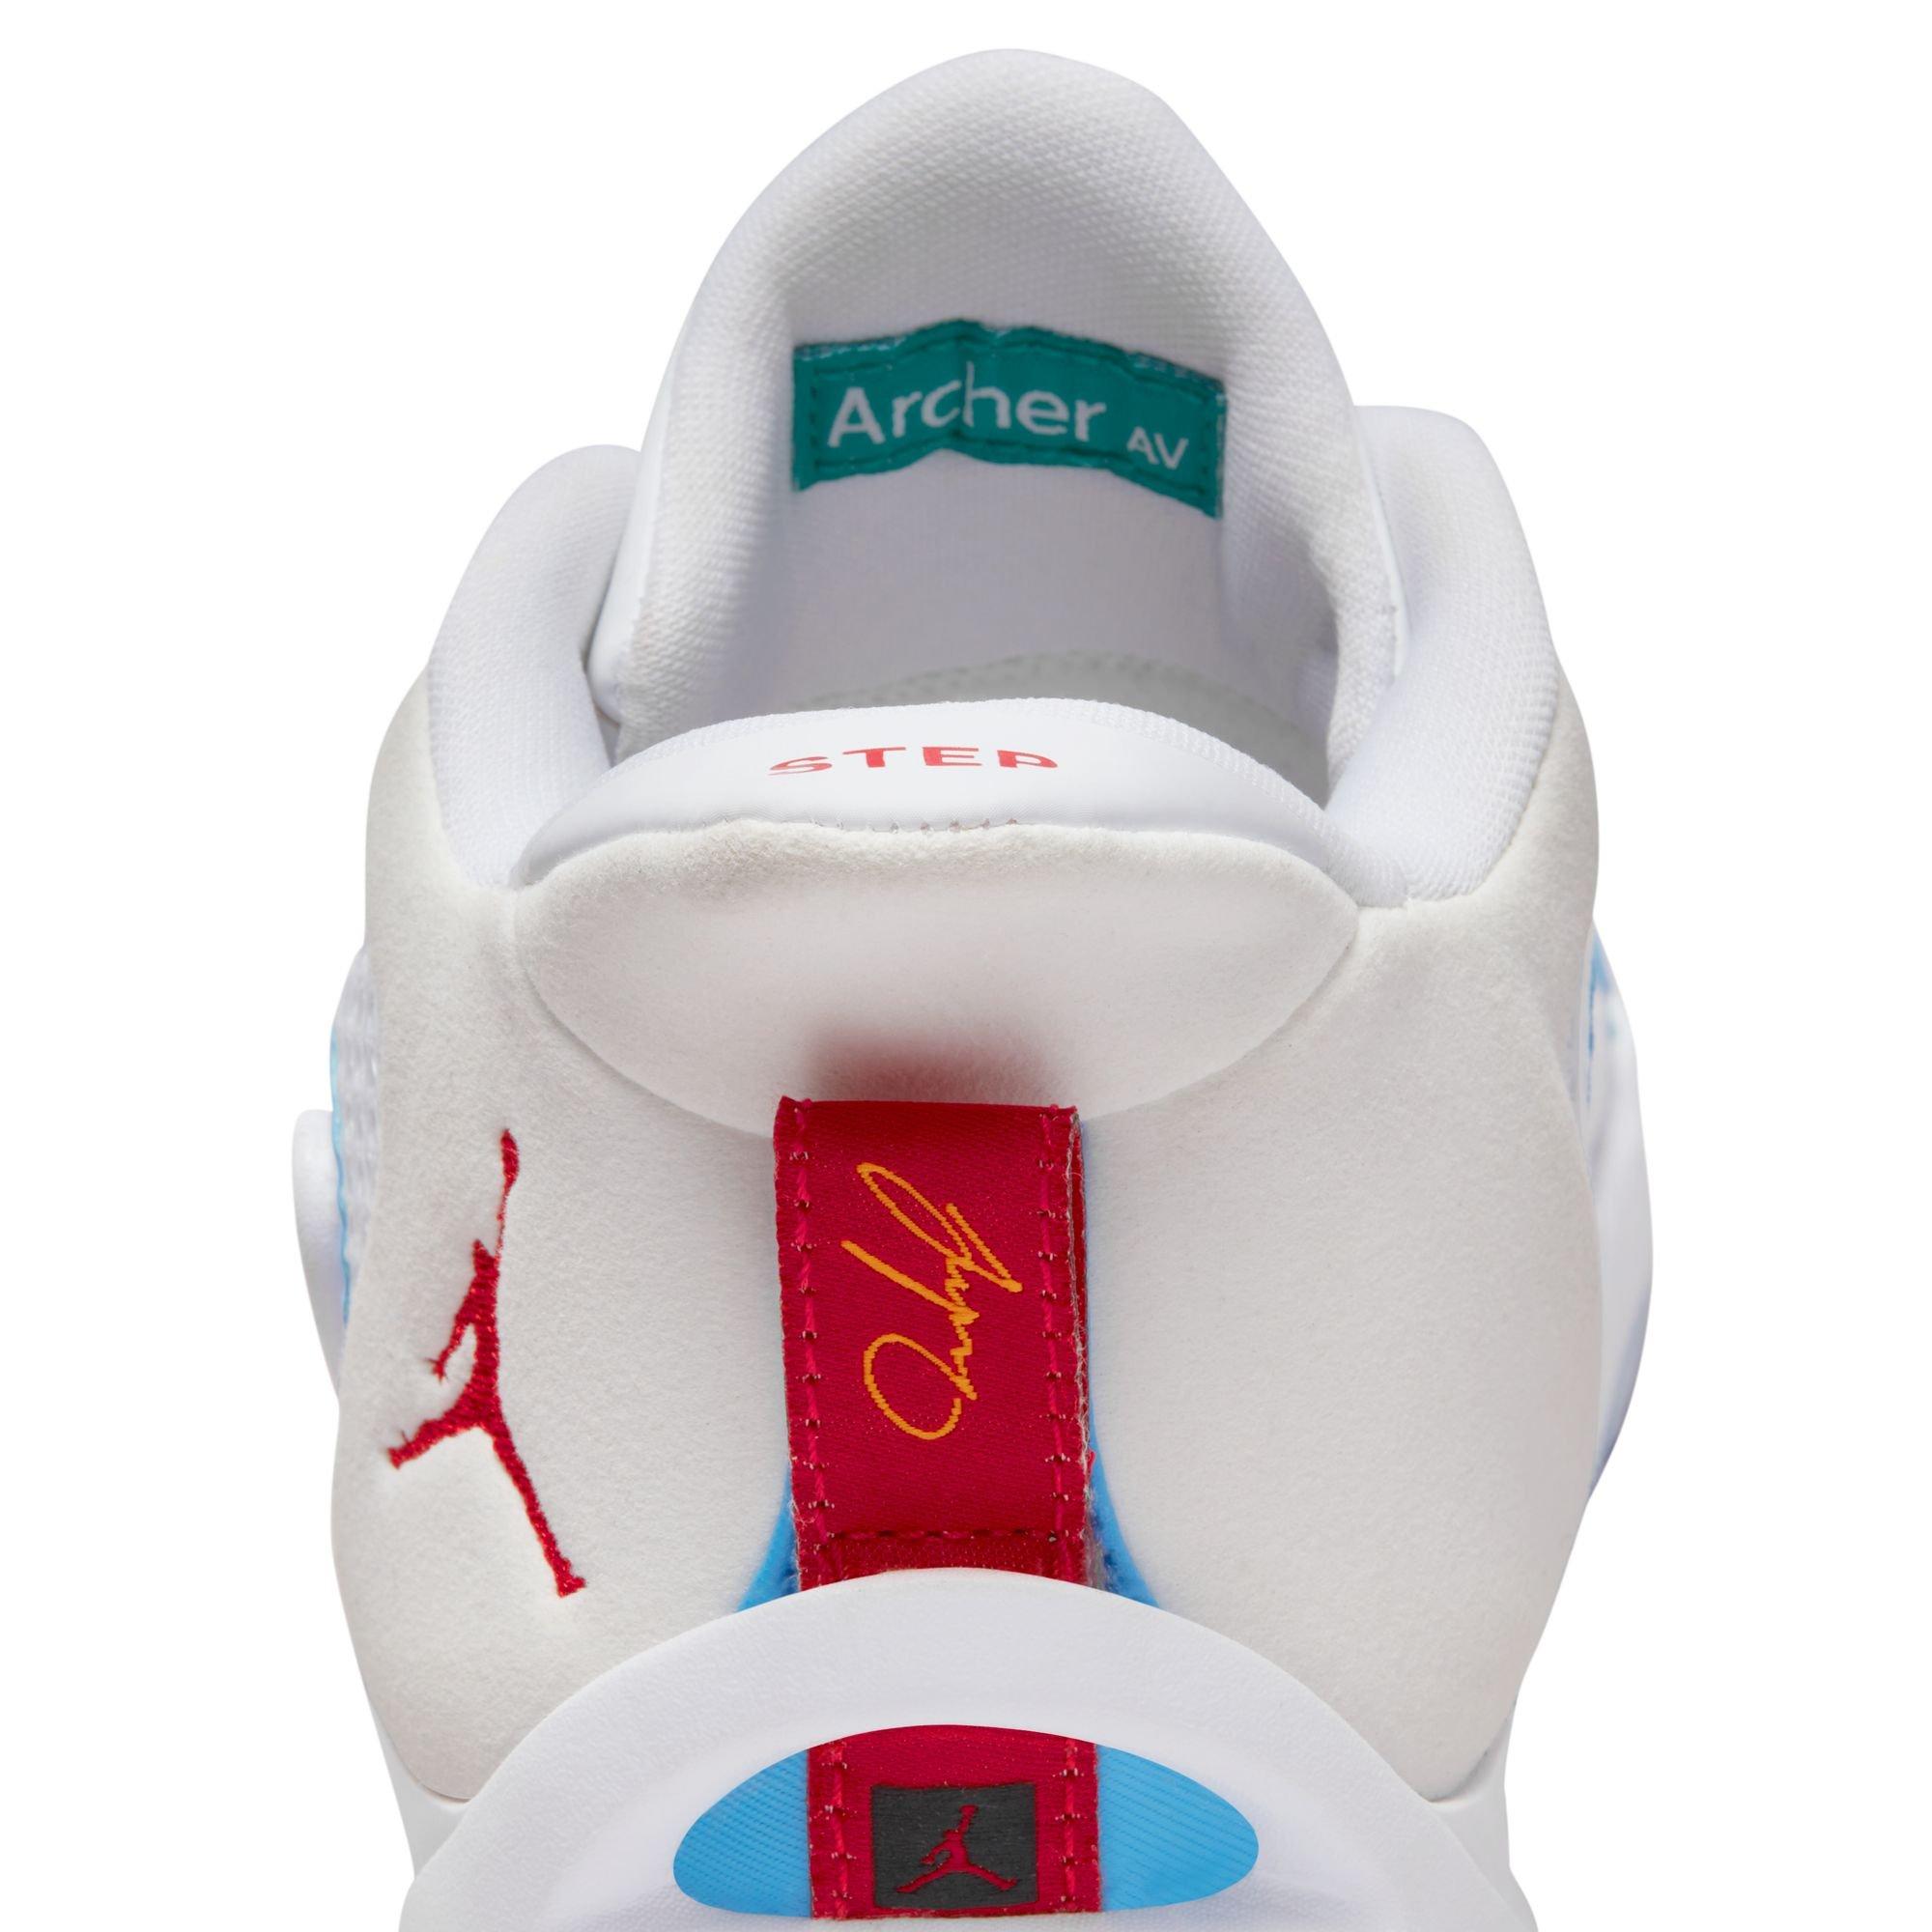 Air Jordan Jayson Tatum 1 St Louis Shoes Mens 10 US Basketball Sneakers